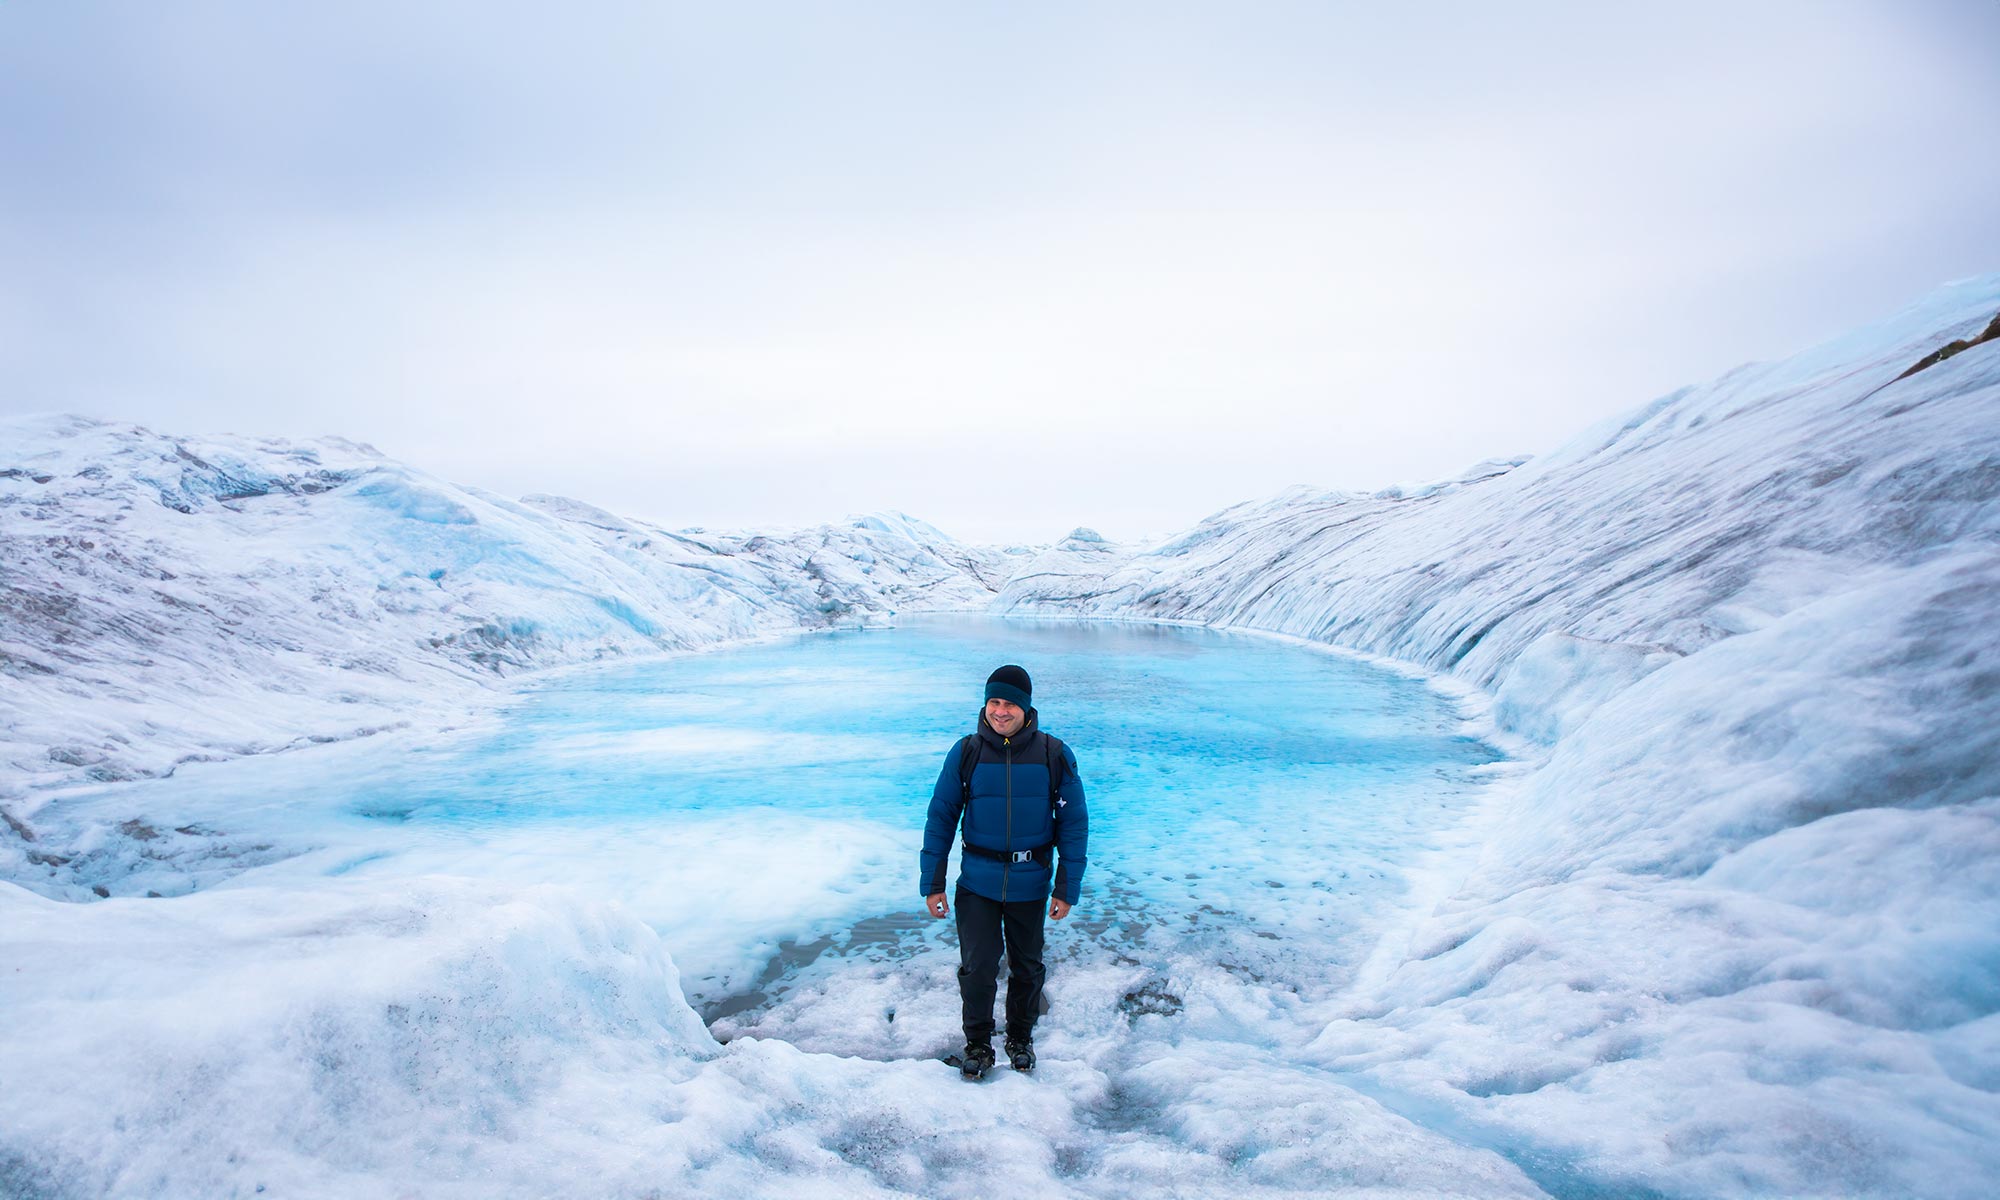 Arctic Majesty – A breathtaking moment captured during an ice cap tour near Kangerlussuaq.